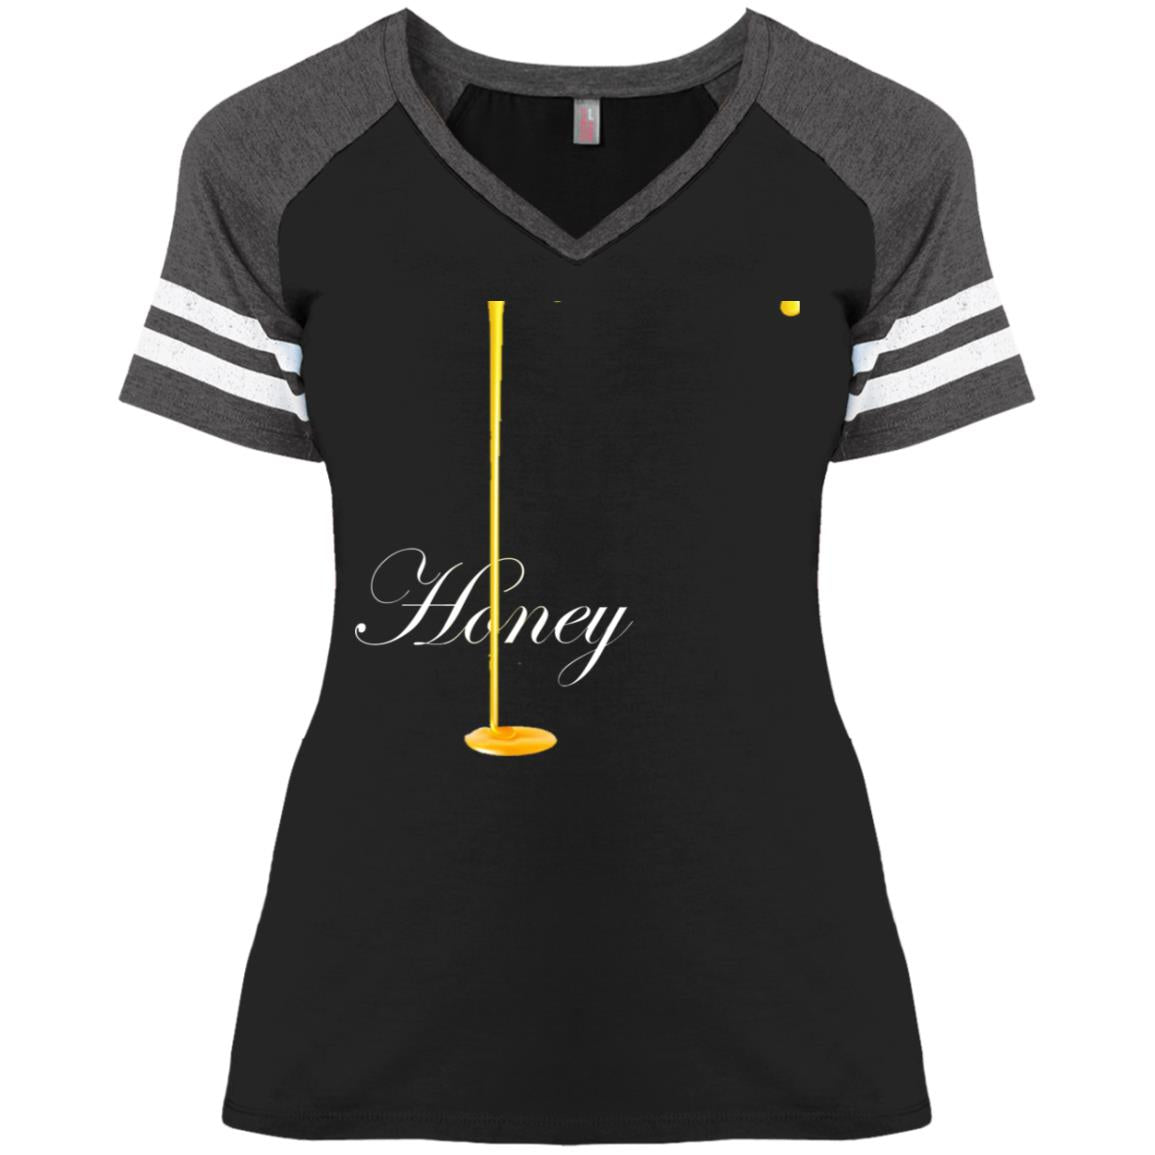 Honey-Ladies' Game V-Neck T-Shirt